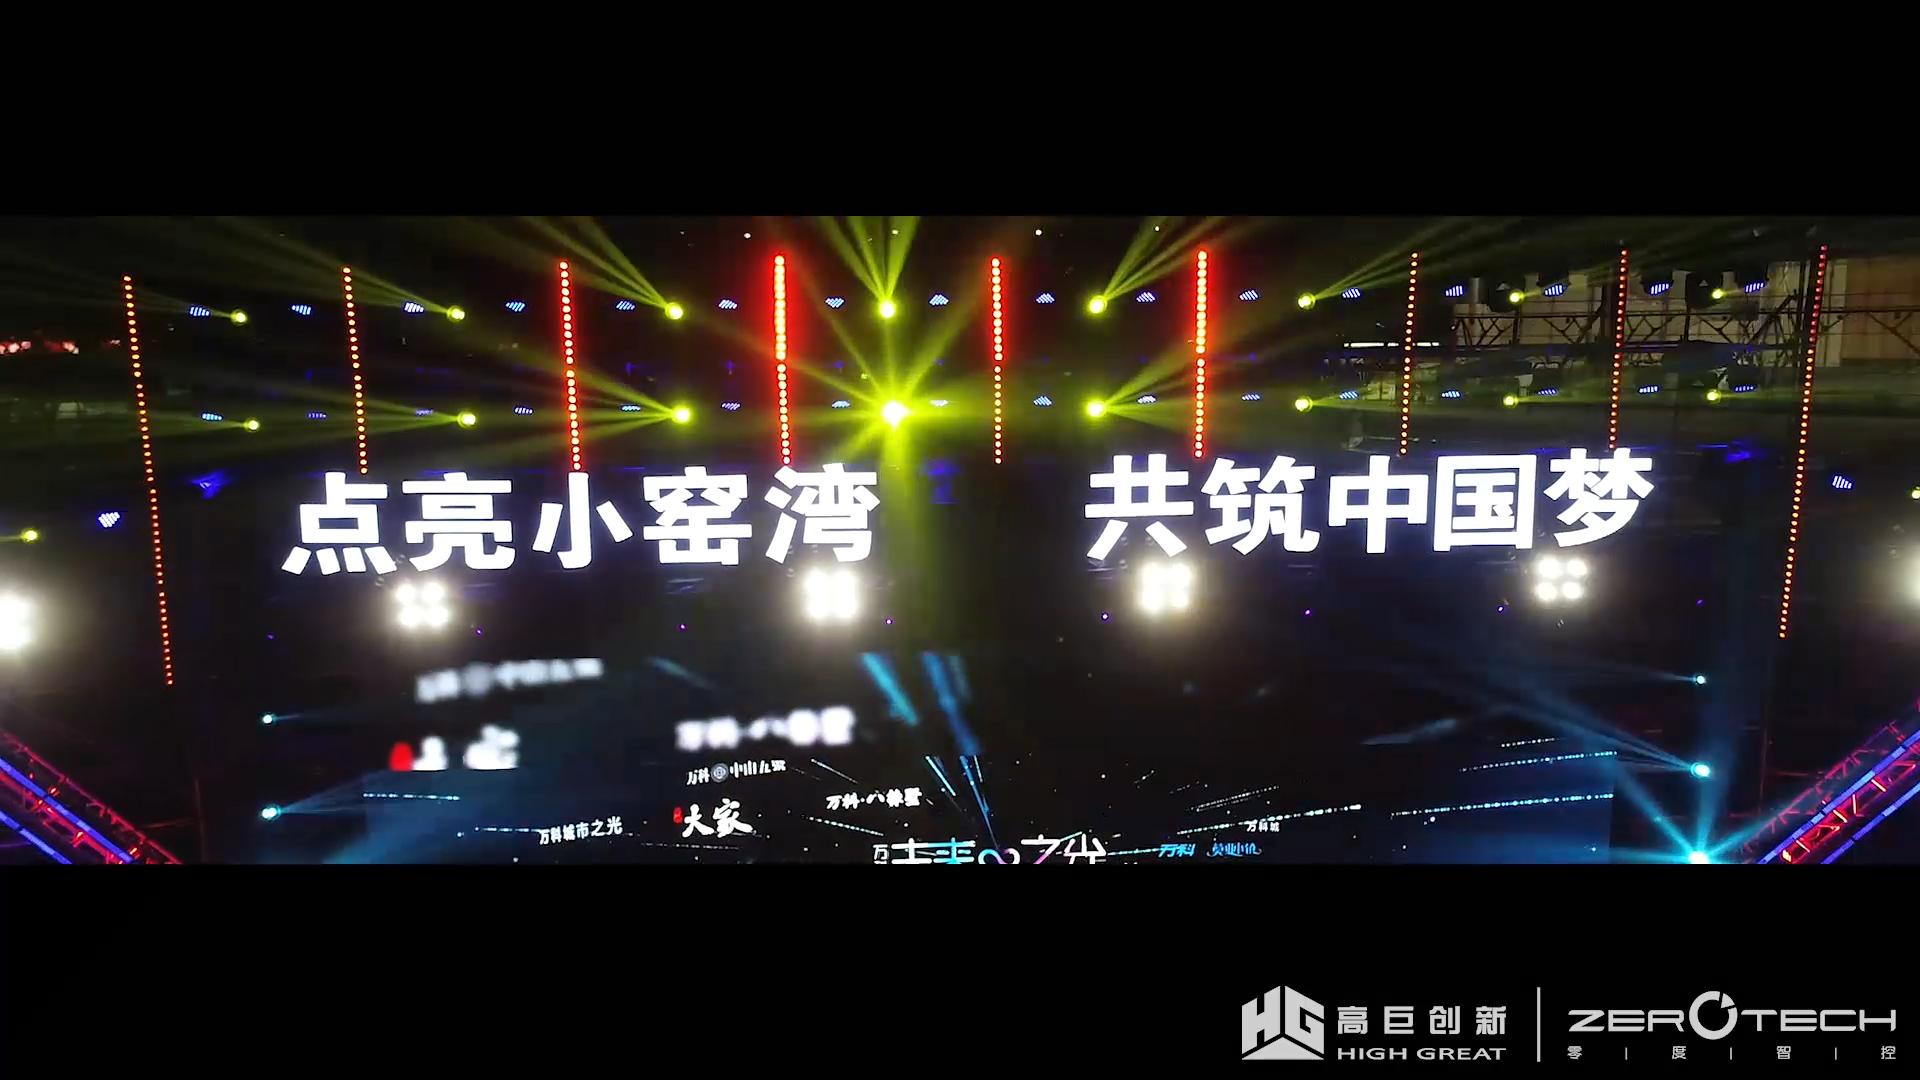 Dalian drone light show